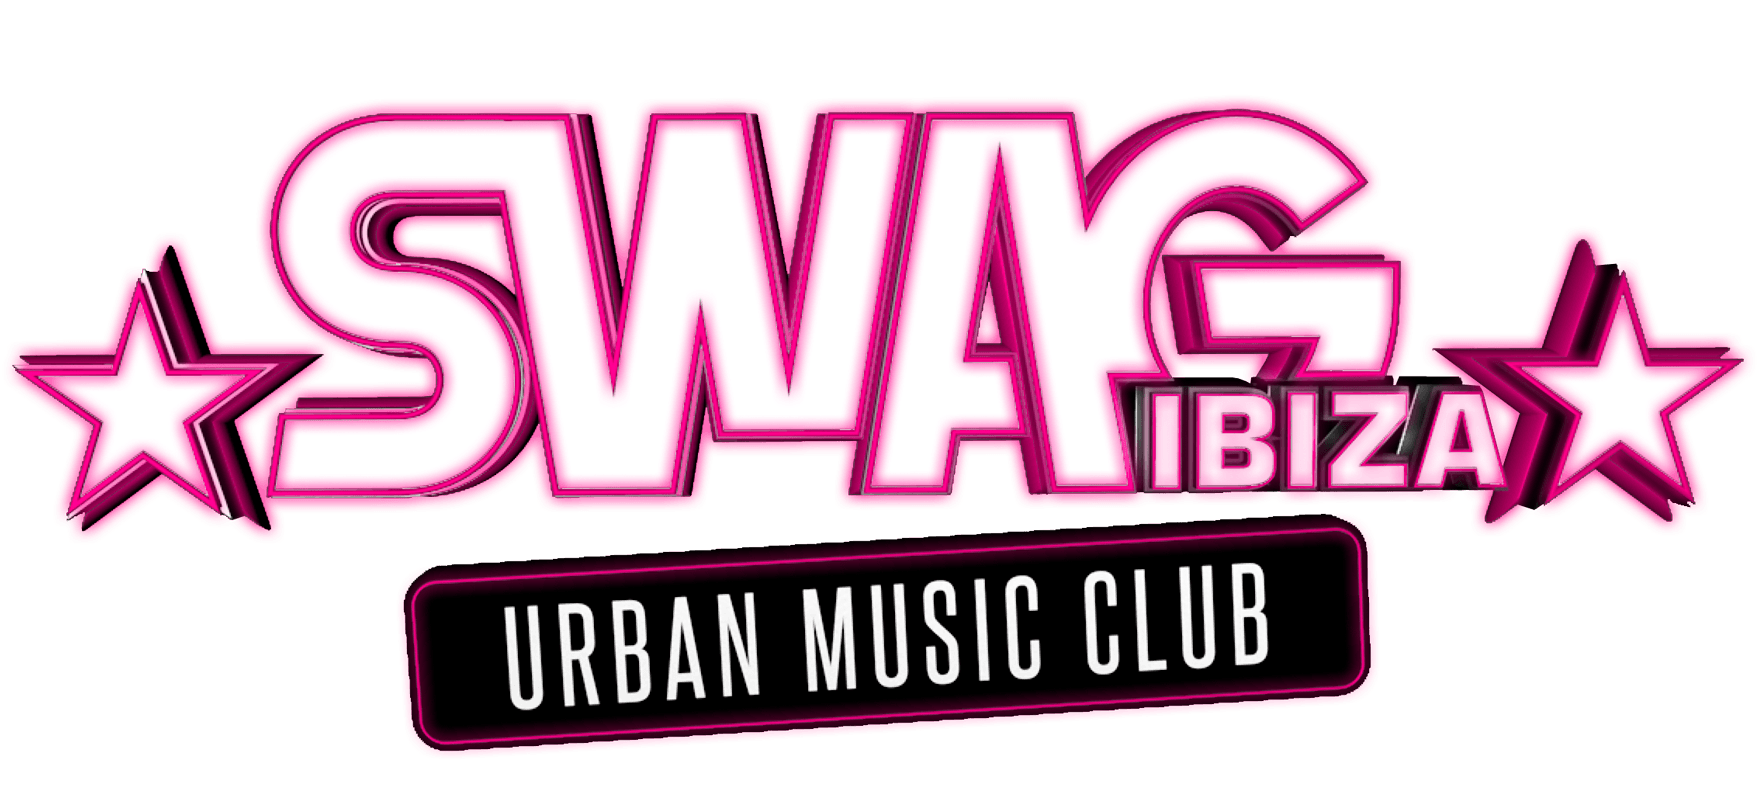 Swag Logo - SWAG Club Ibiza - The Urban Music Club in Ibiza